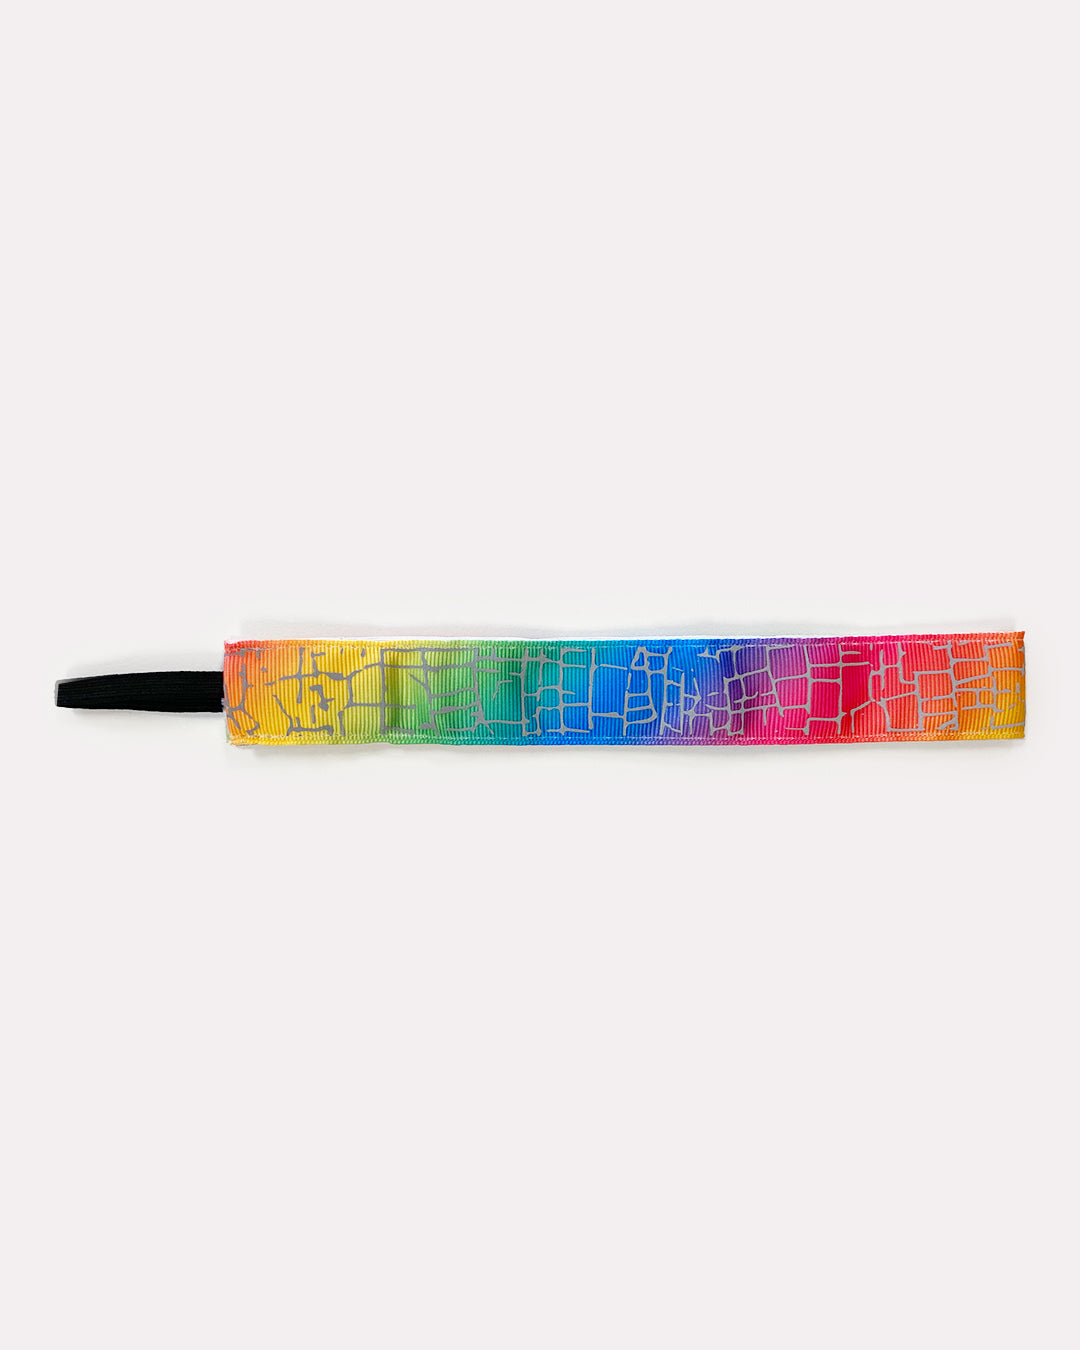 Rainbow Crackle - 1" Reflective Headband